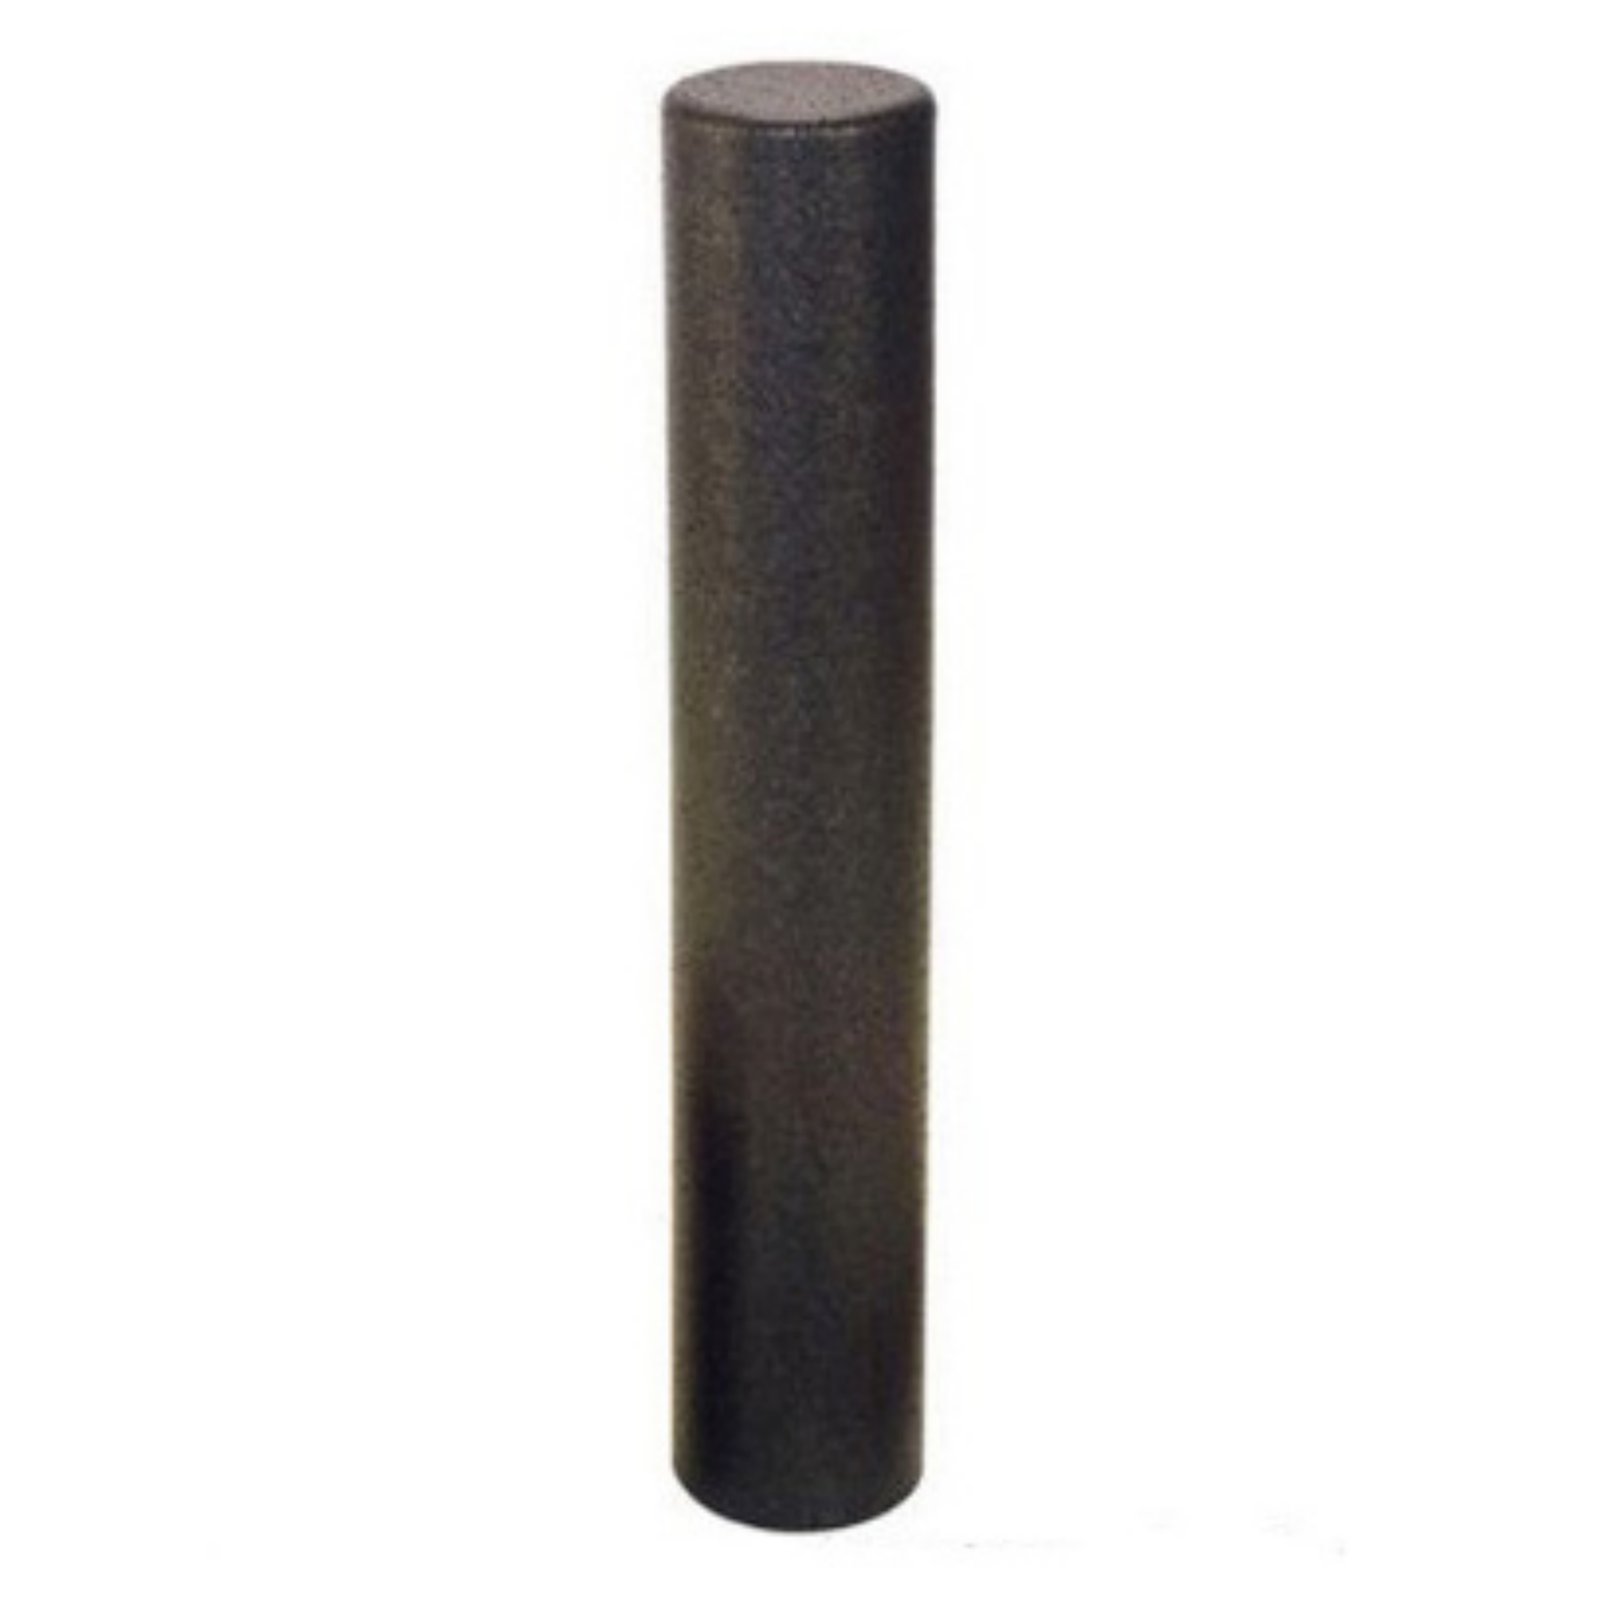 Black High Density Foam Roller- 36" - image 1 of 4